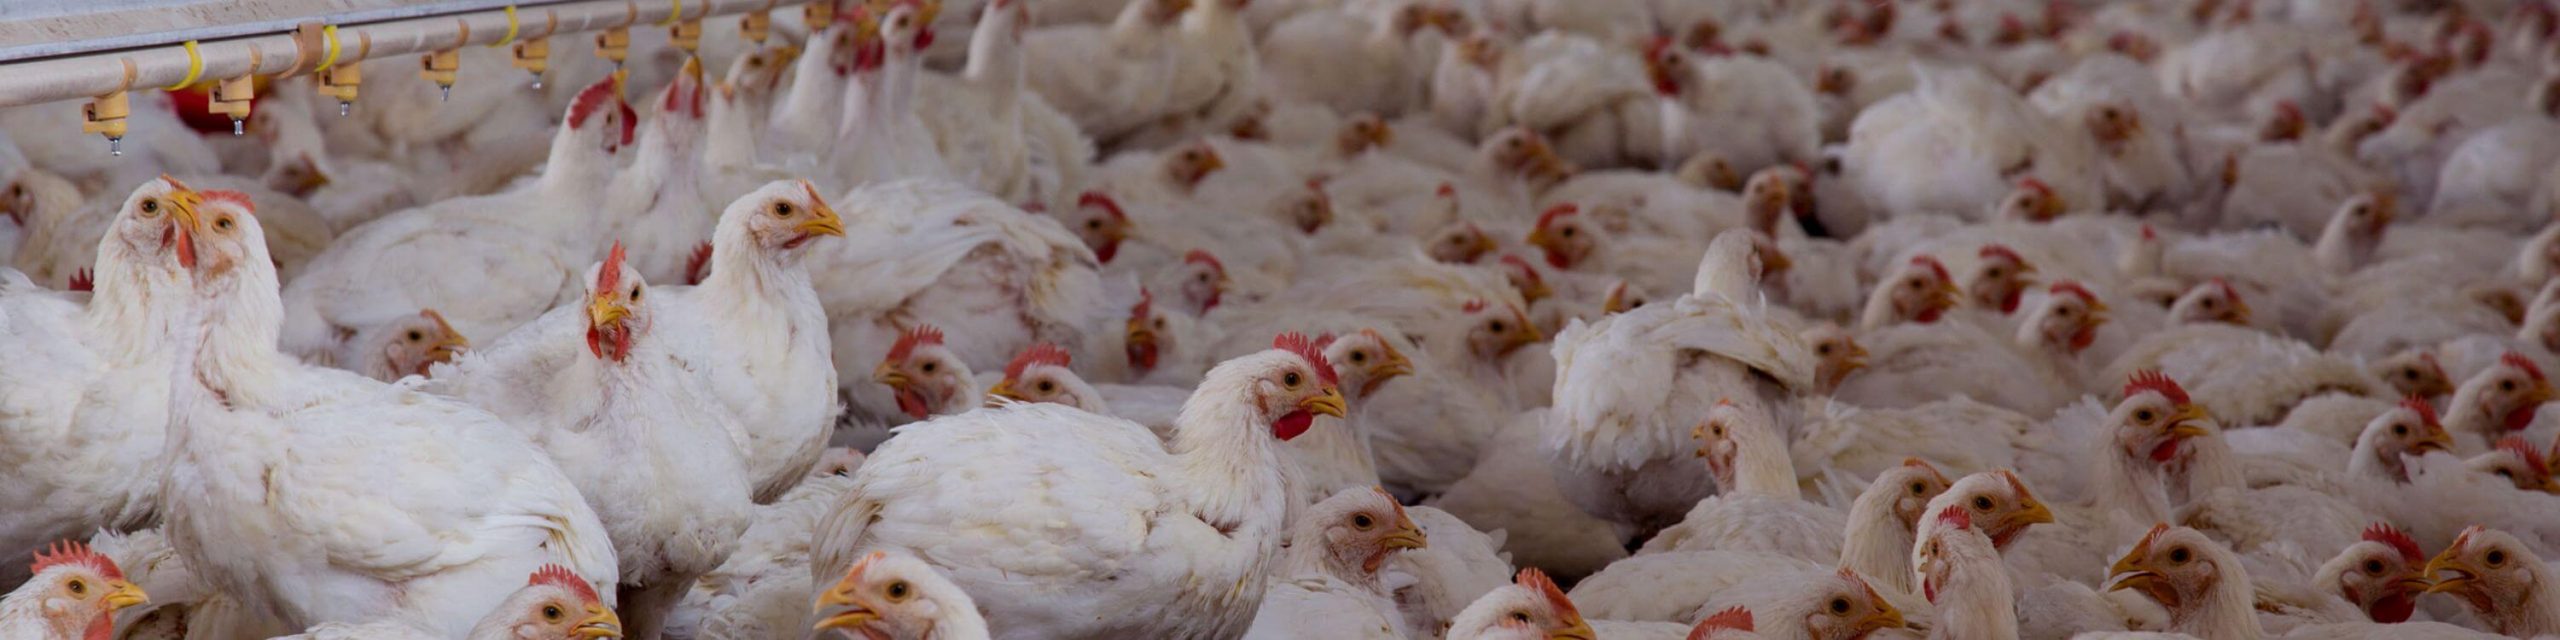 Chicken in factory farm